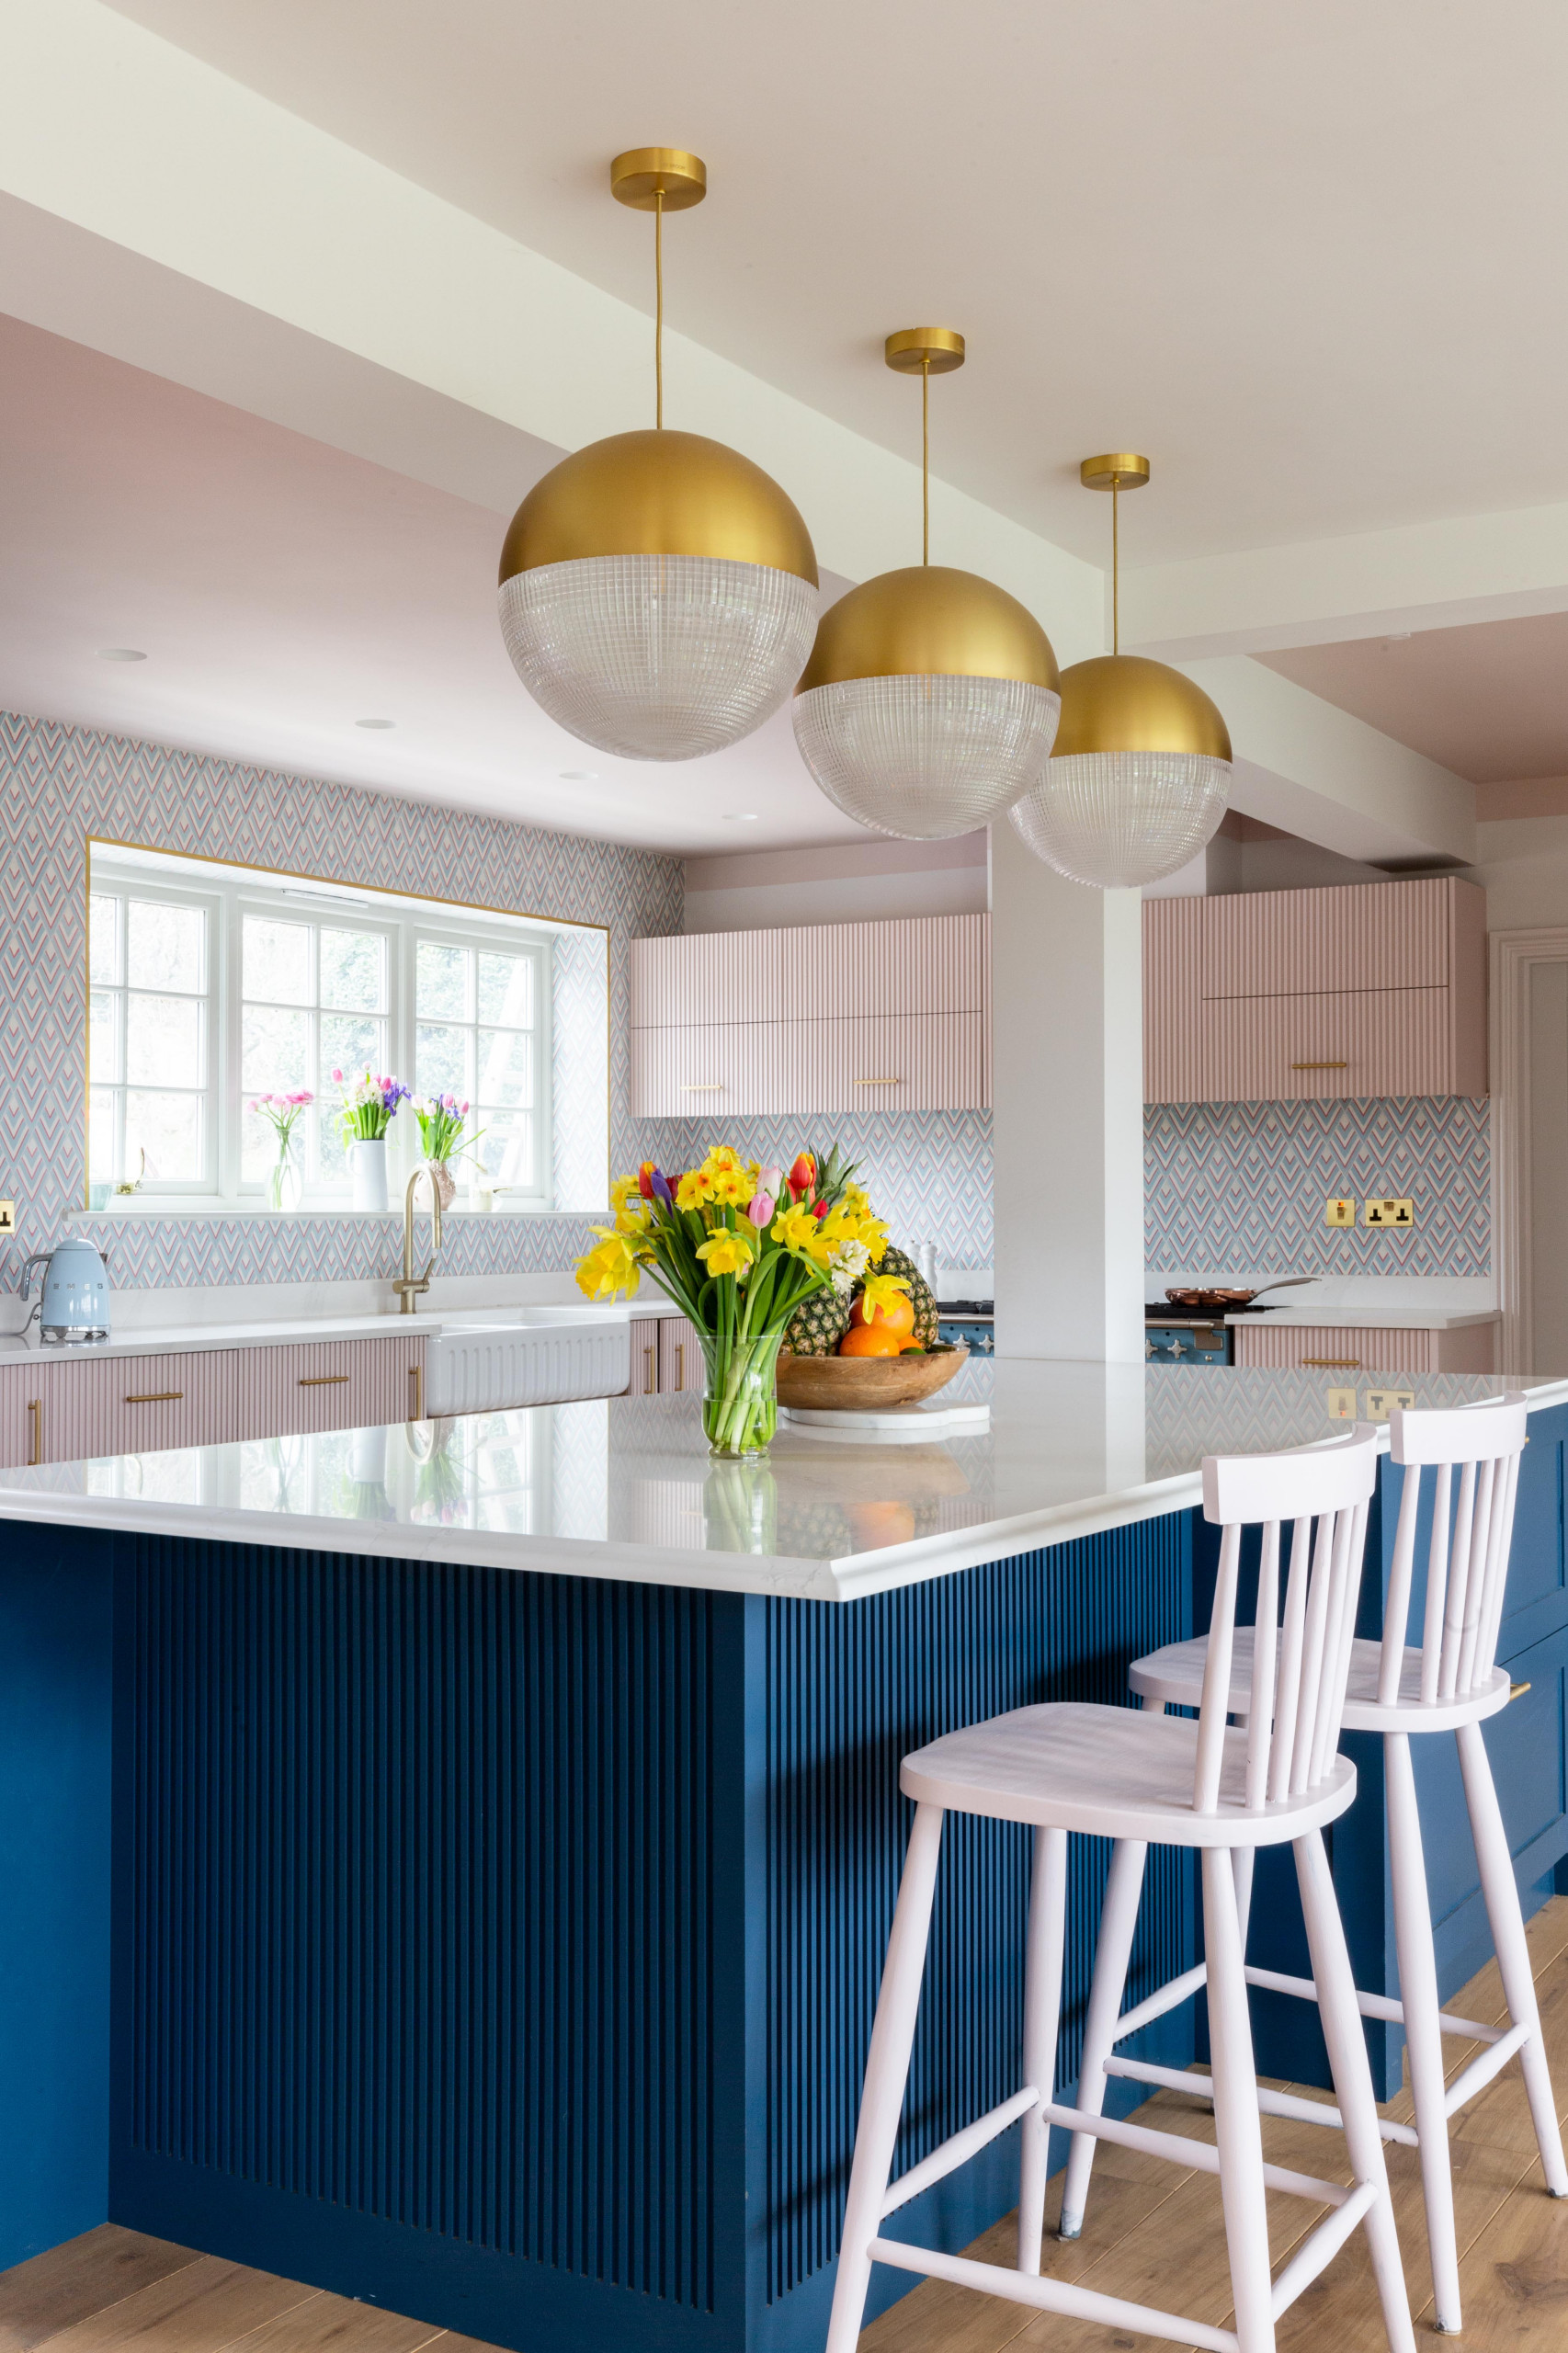 40 Soothing Pastel Kitchen Decor Ideas - Shelterness